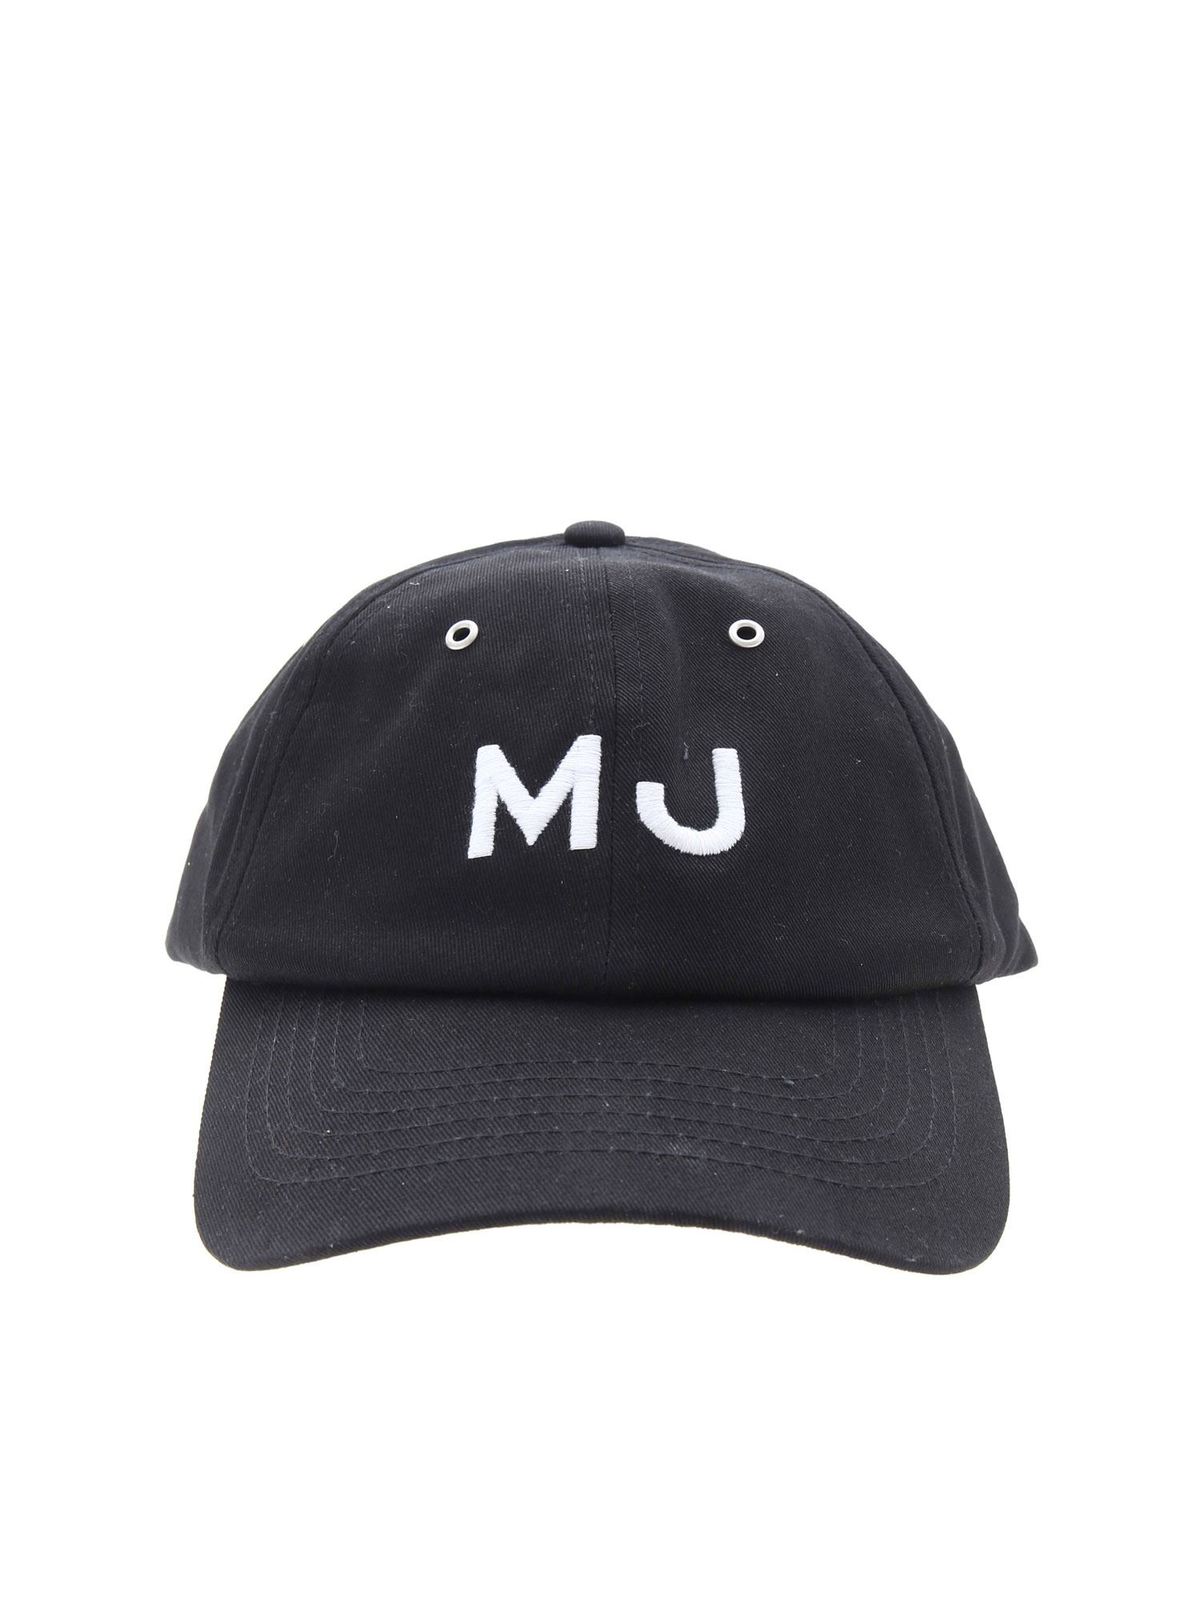 Marc Jacobs Mj Cap In Black